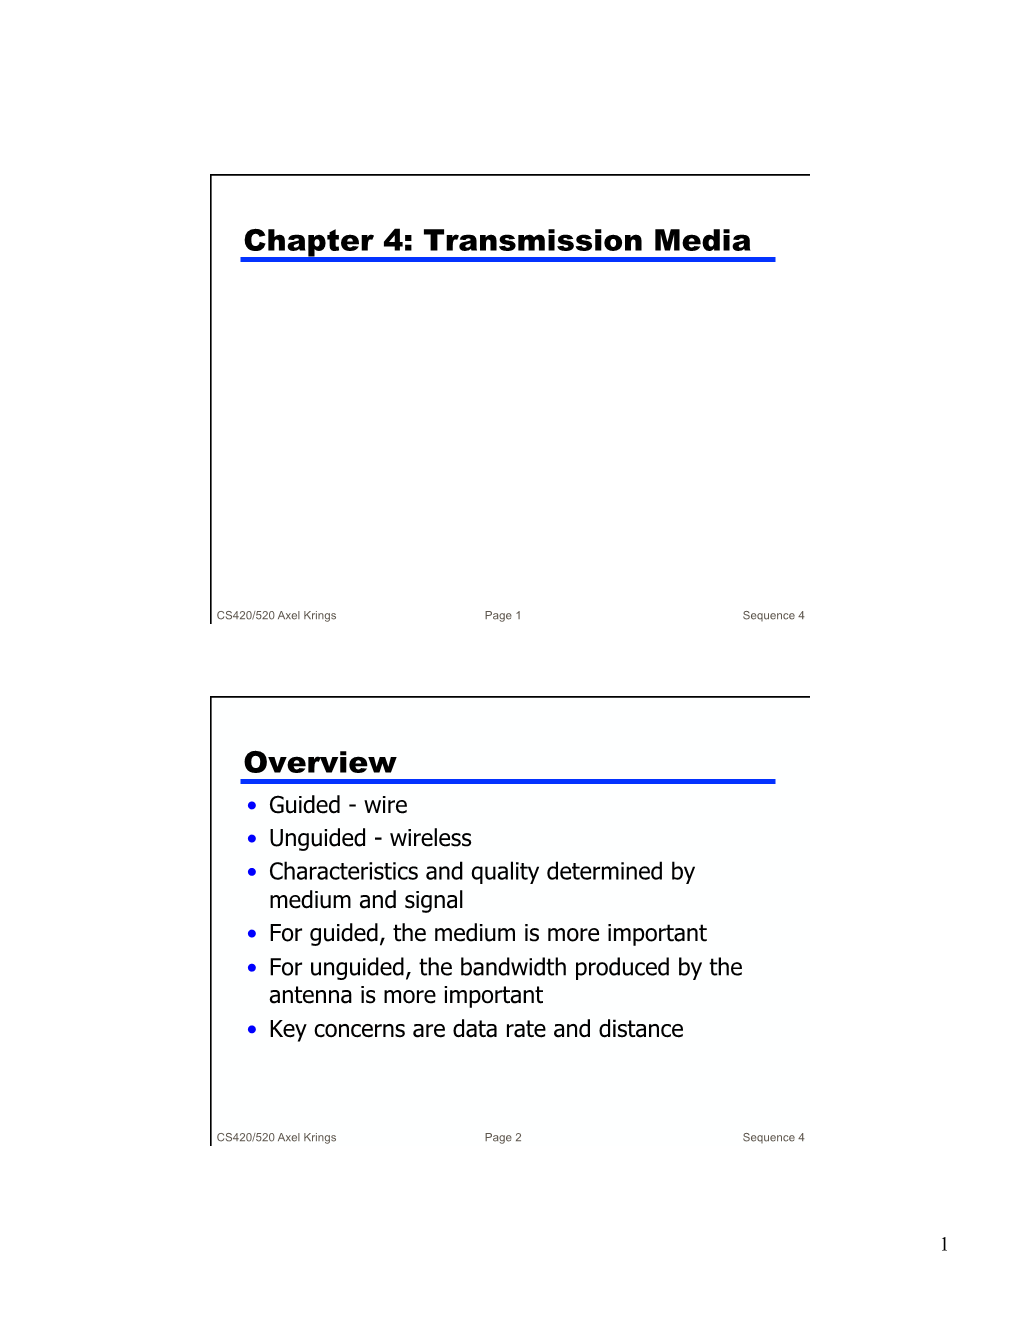 Chapter 4: Transmission Media Overview